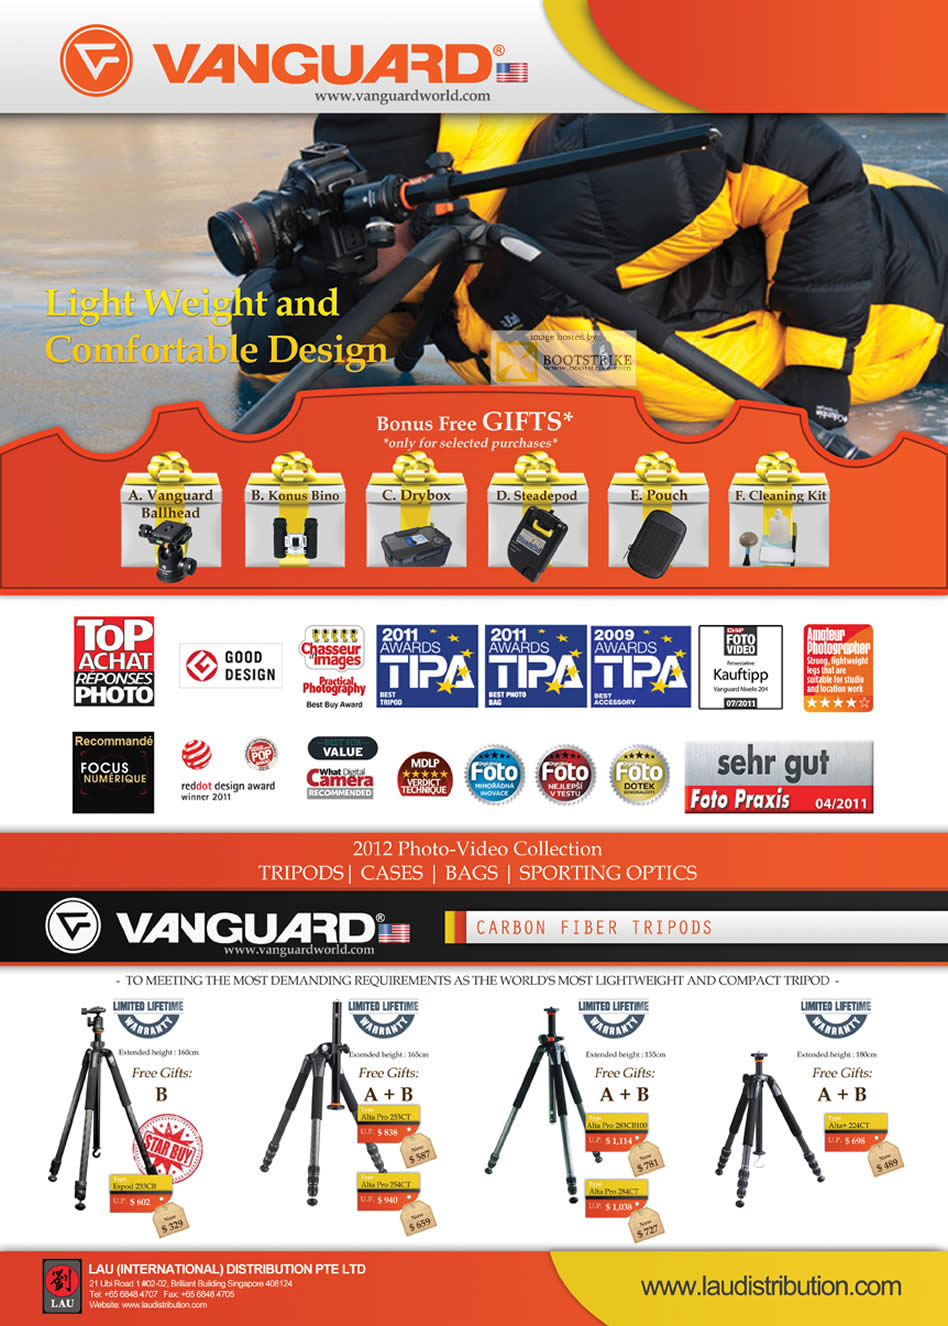 SITEX 2011 price list image brochure of Lau Intl Vanguard Awards, Features, Carbon Fibre Tripods, Alta Pro